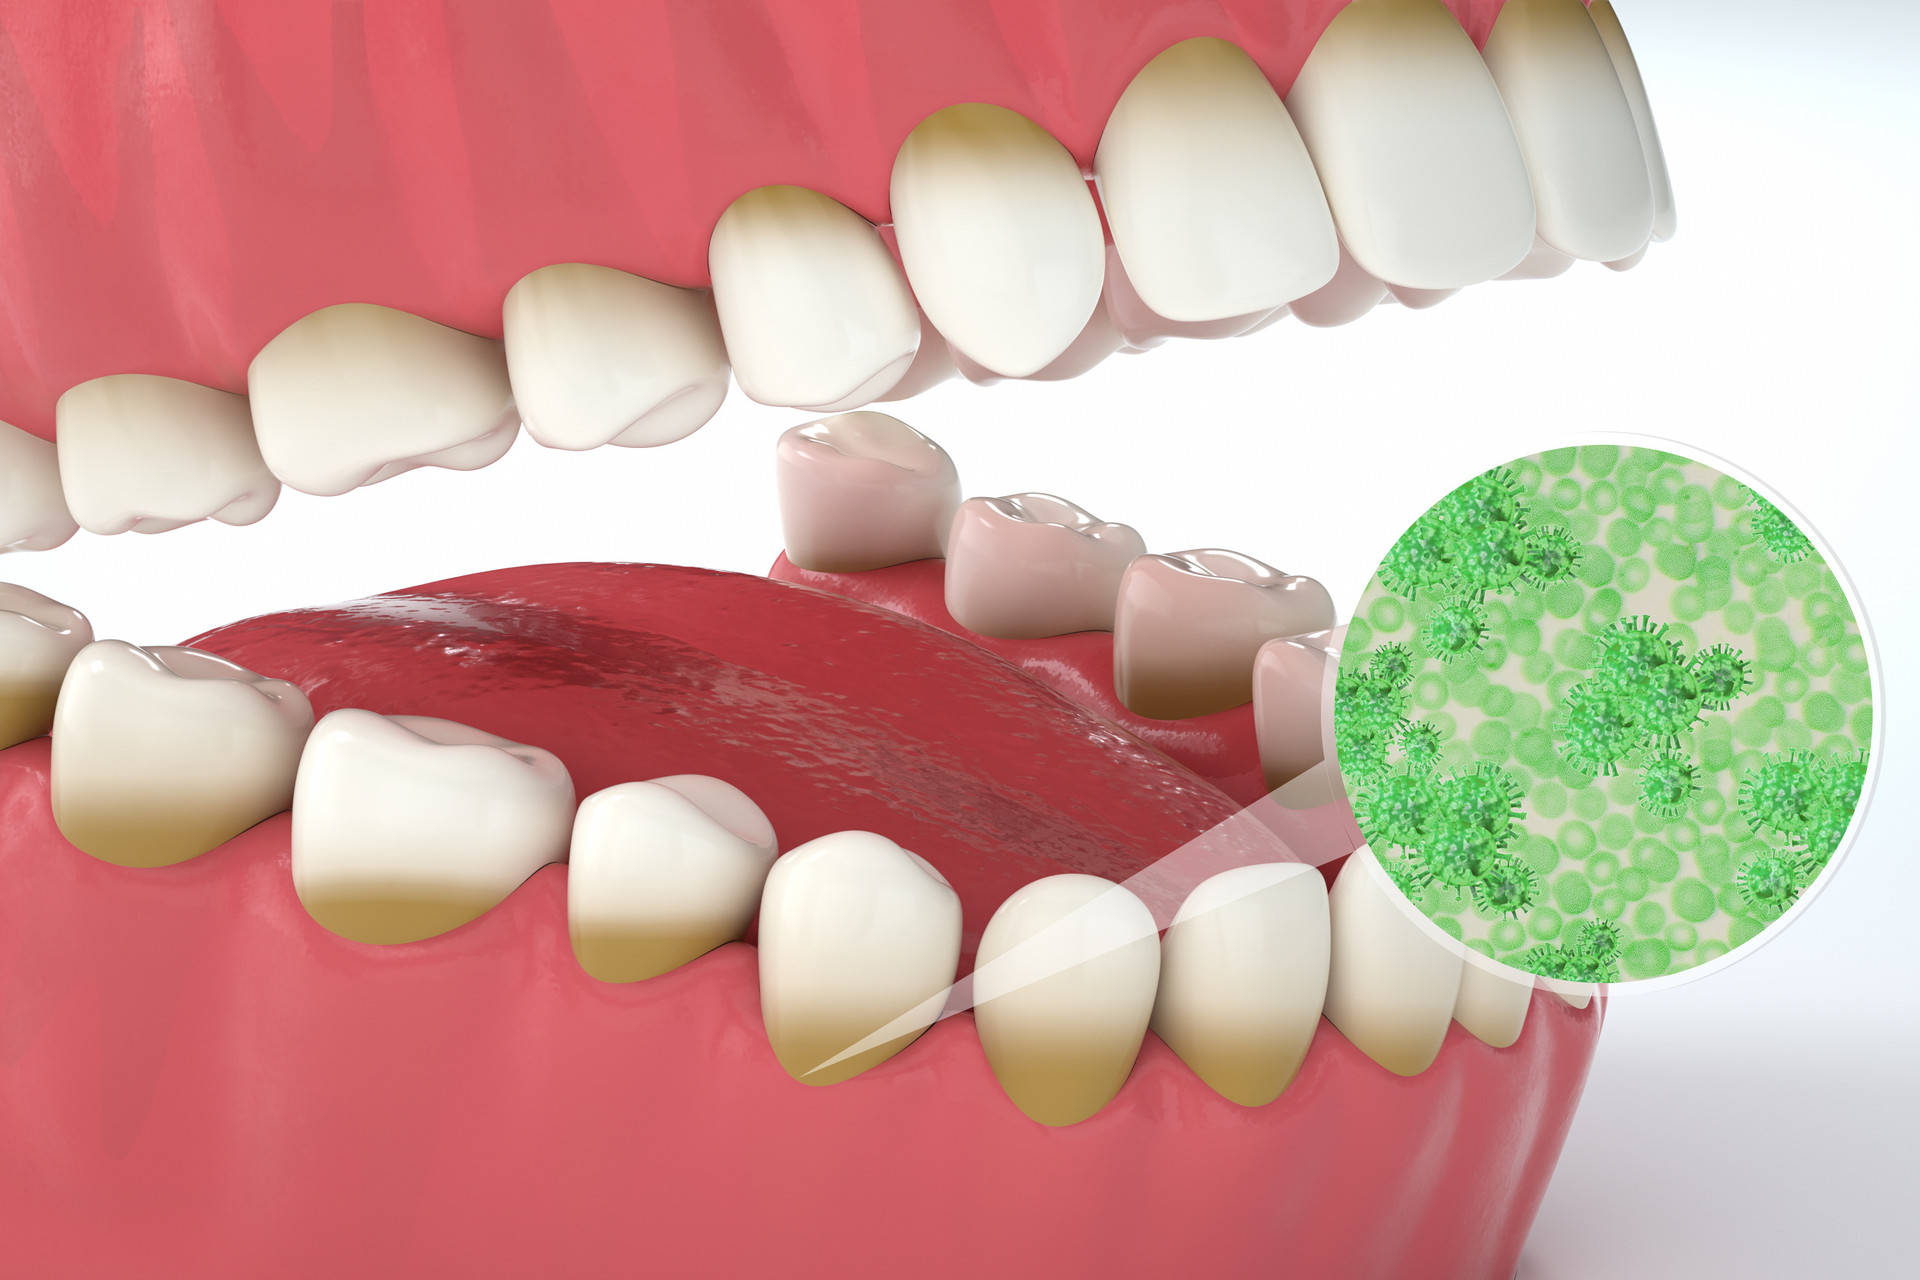 J Clin Periodontol：严重牙周炎致牙齿病理性移位和伸长，联合正畸治疗的效果